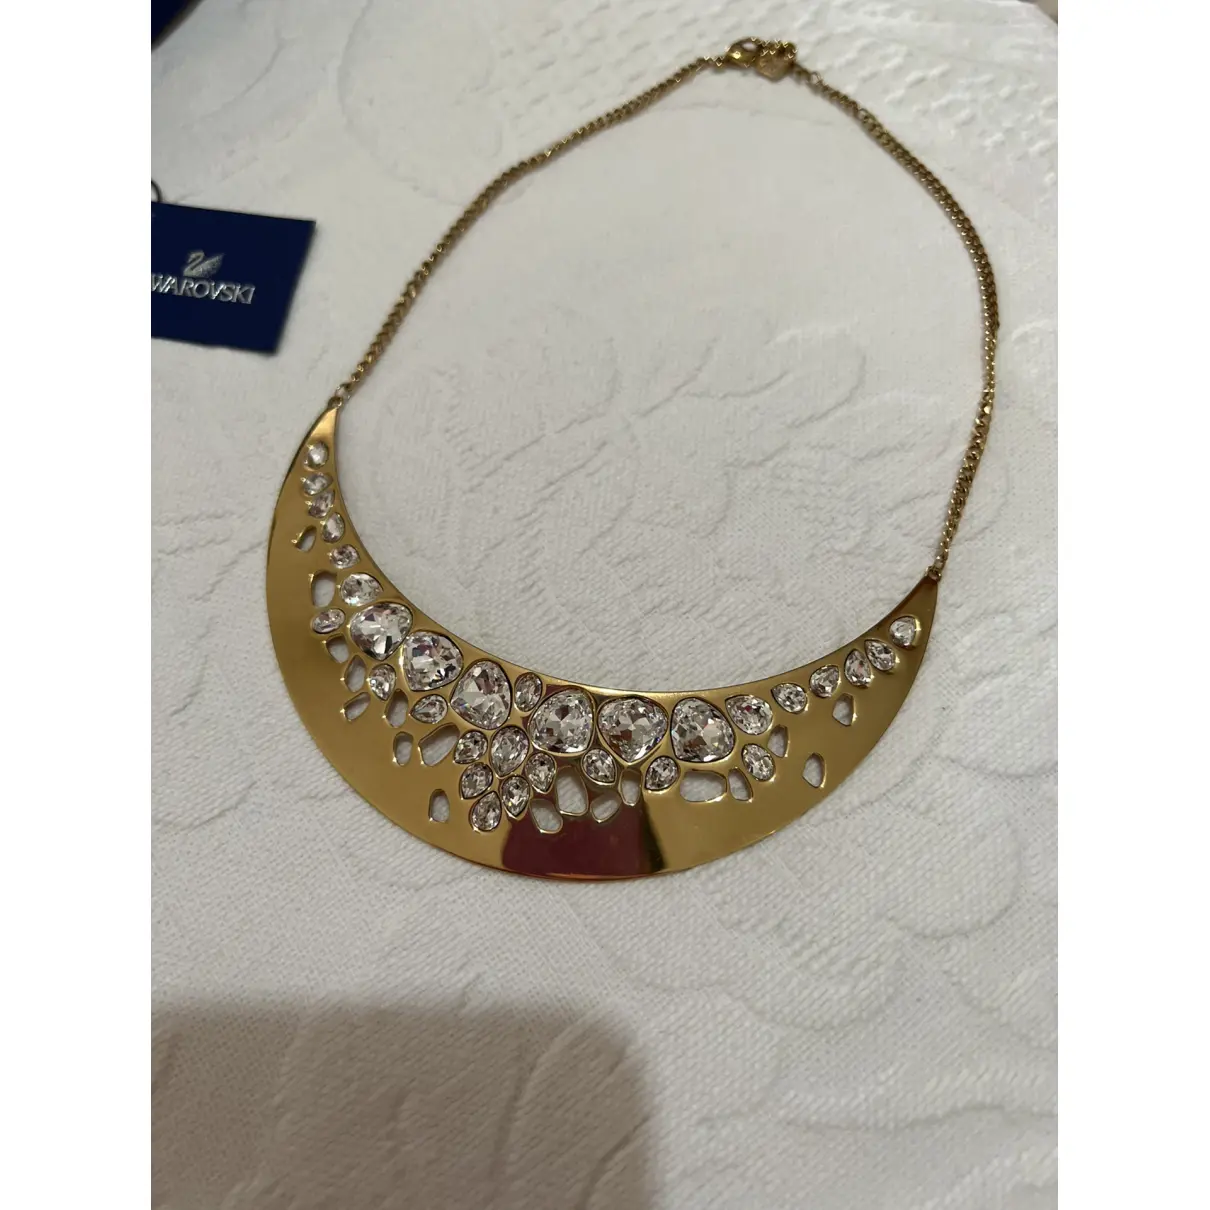 Buy Swarovski Stardust necklace online